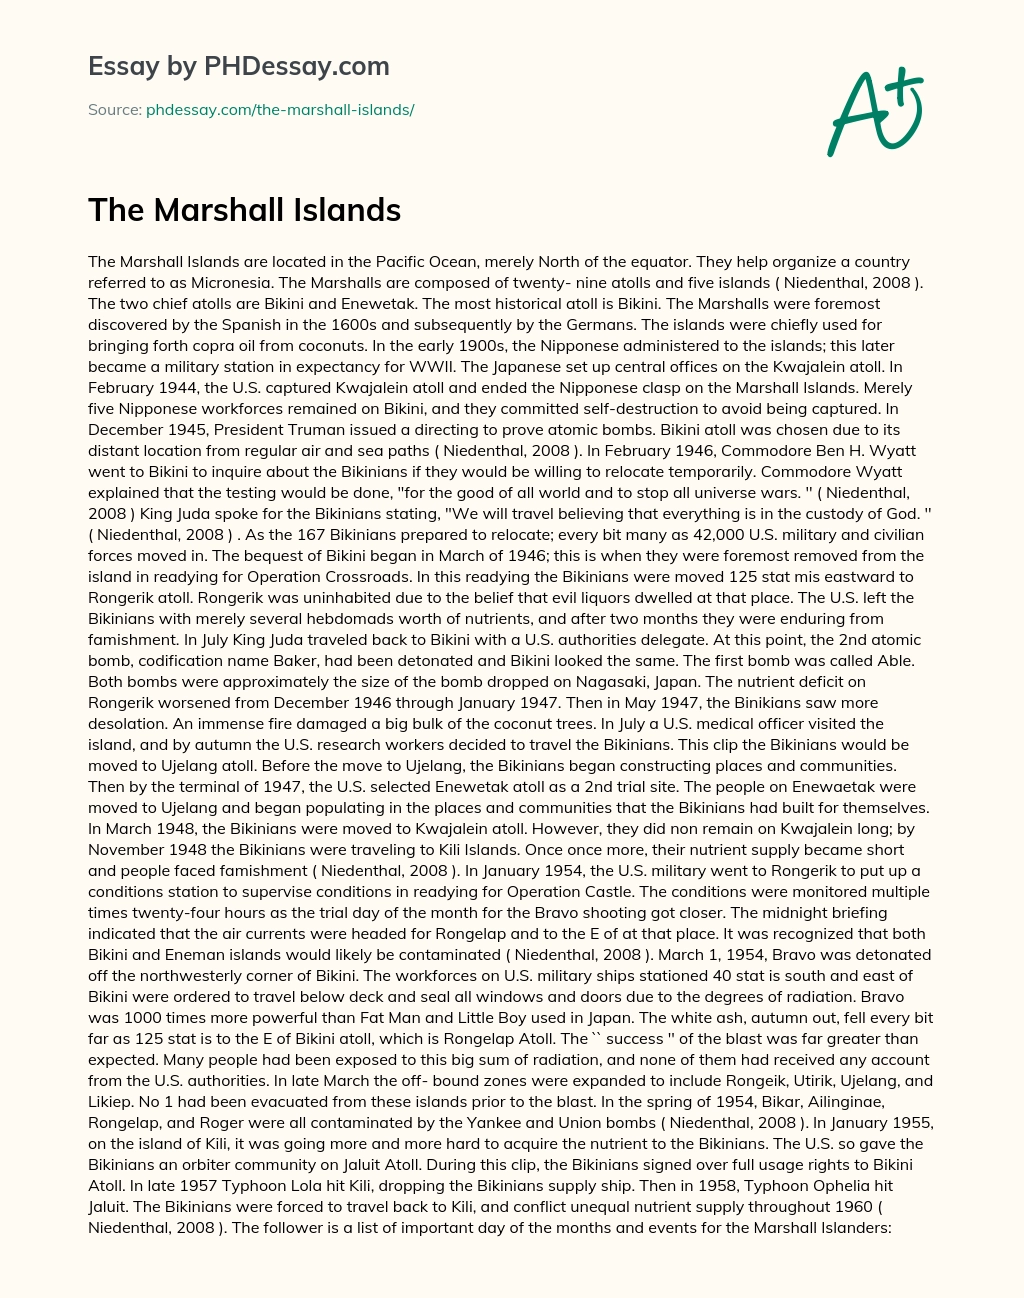 The Marshall Islands essay